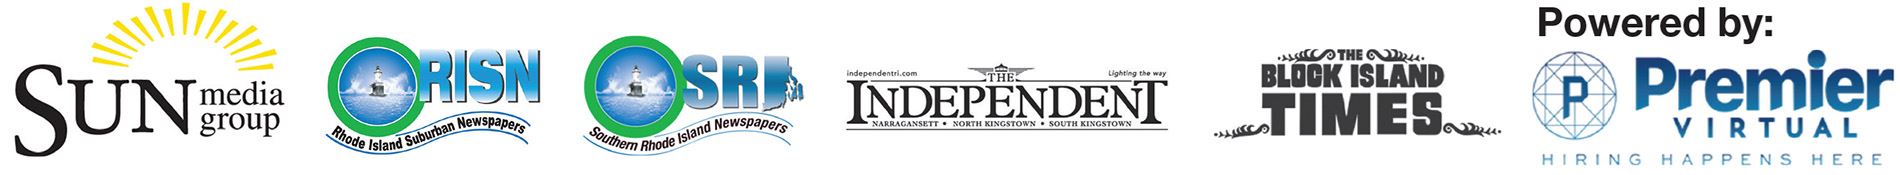 Sun Media Group, RISN, SRI, Independent, Bock Island Times